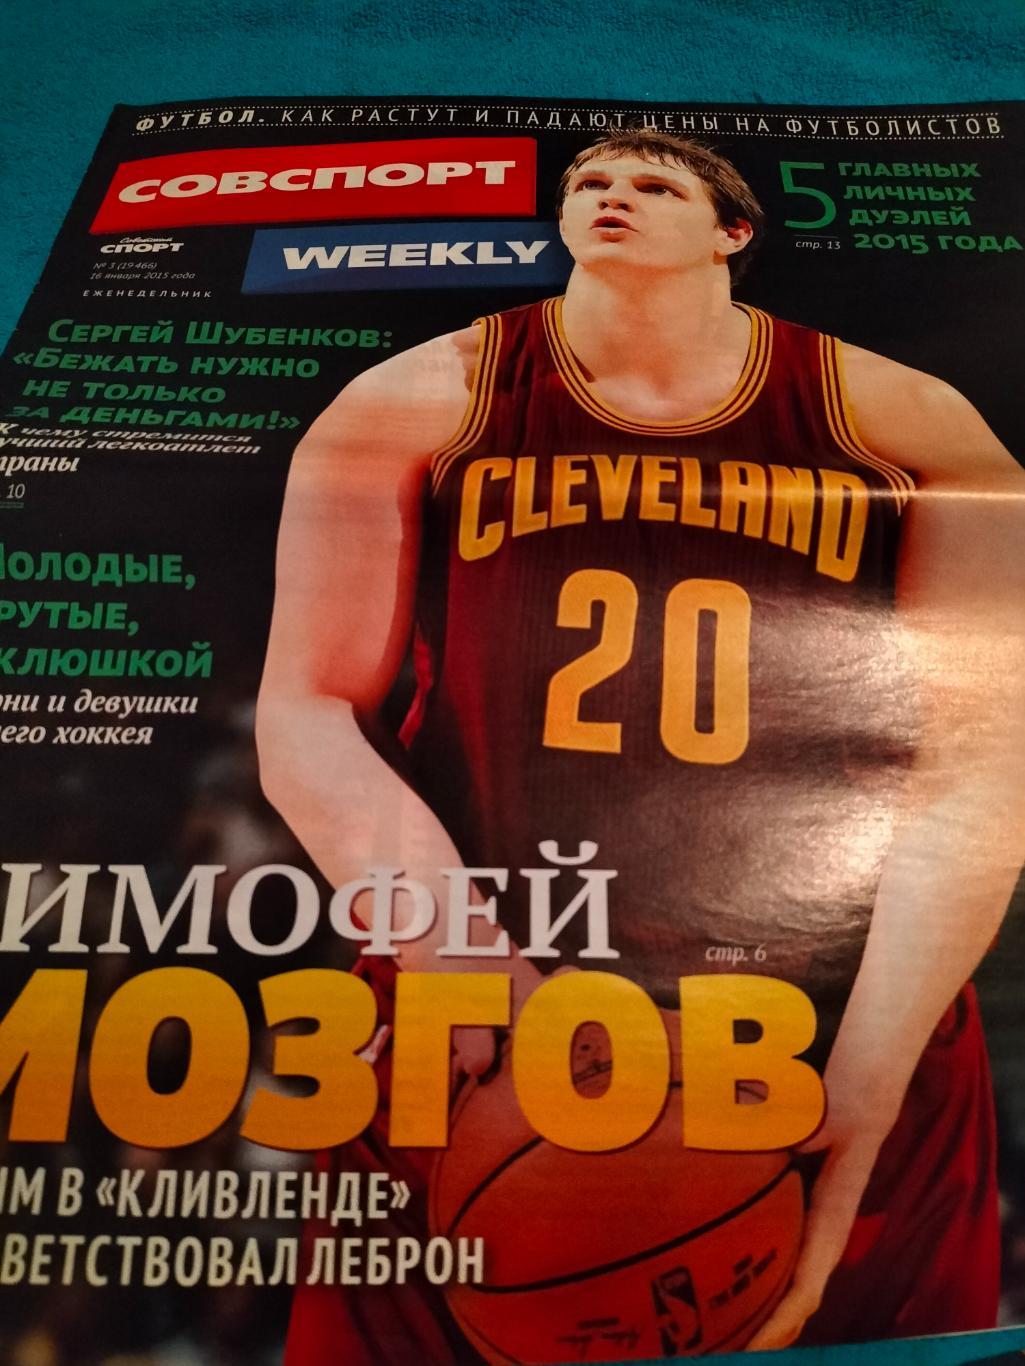 Советский Спорт Weekly №3 2015 года.